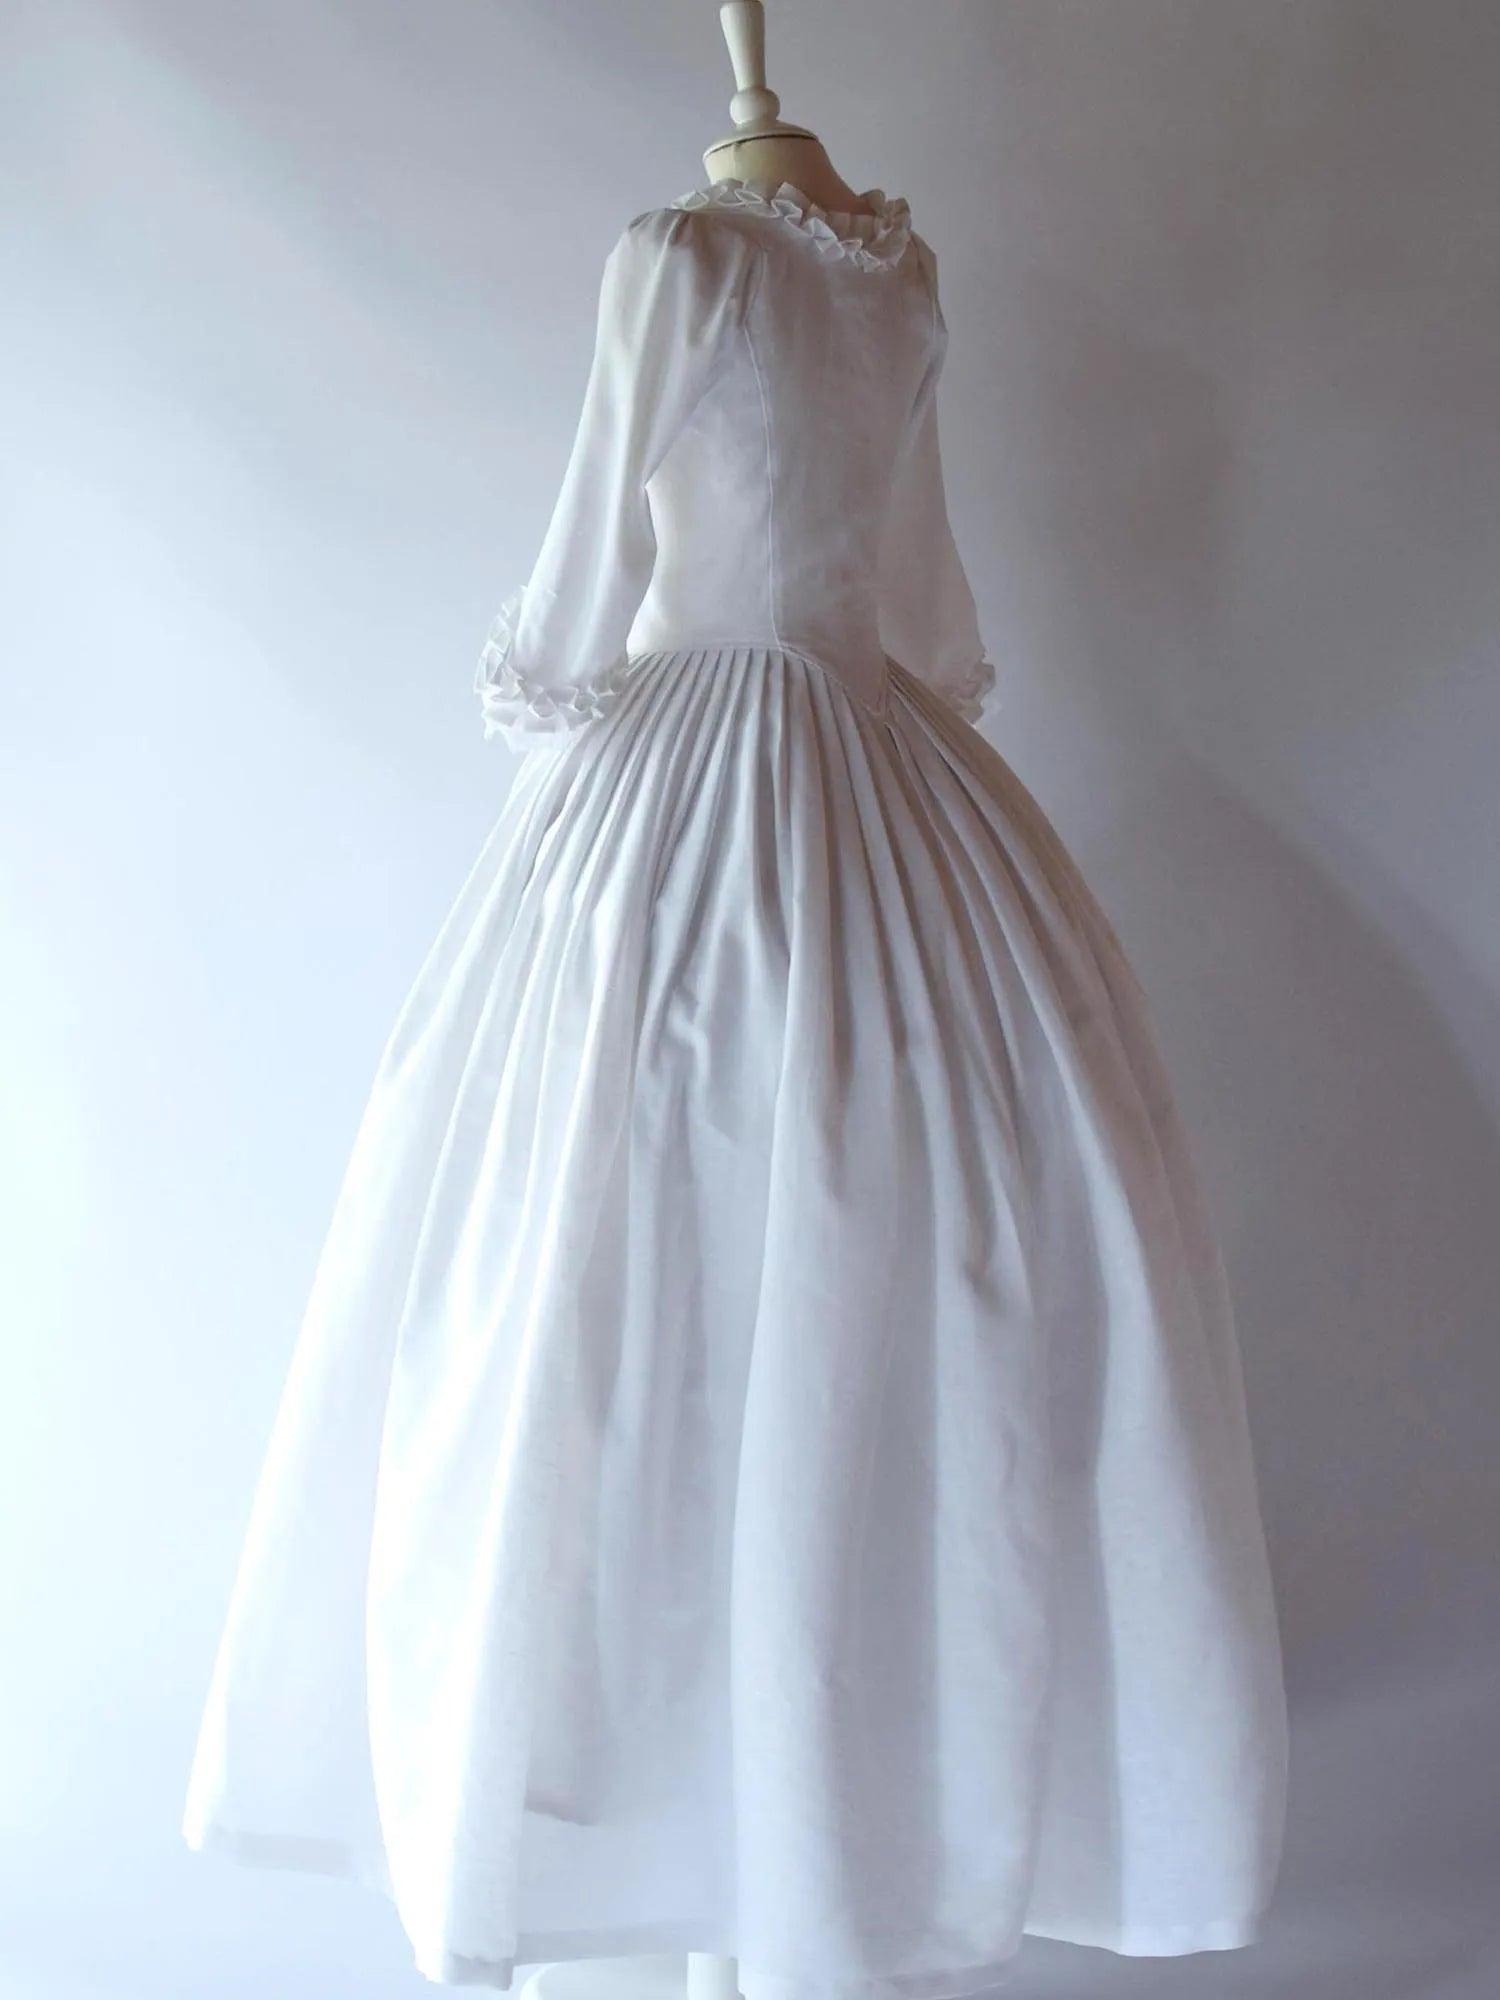 LOUISE, 18th-Century Dress in White Linen - Atelier Serraspina